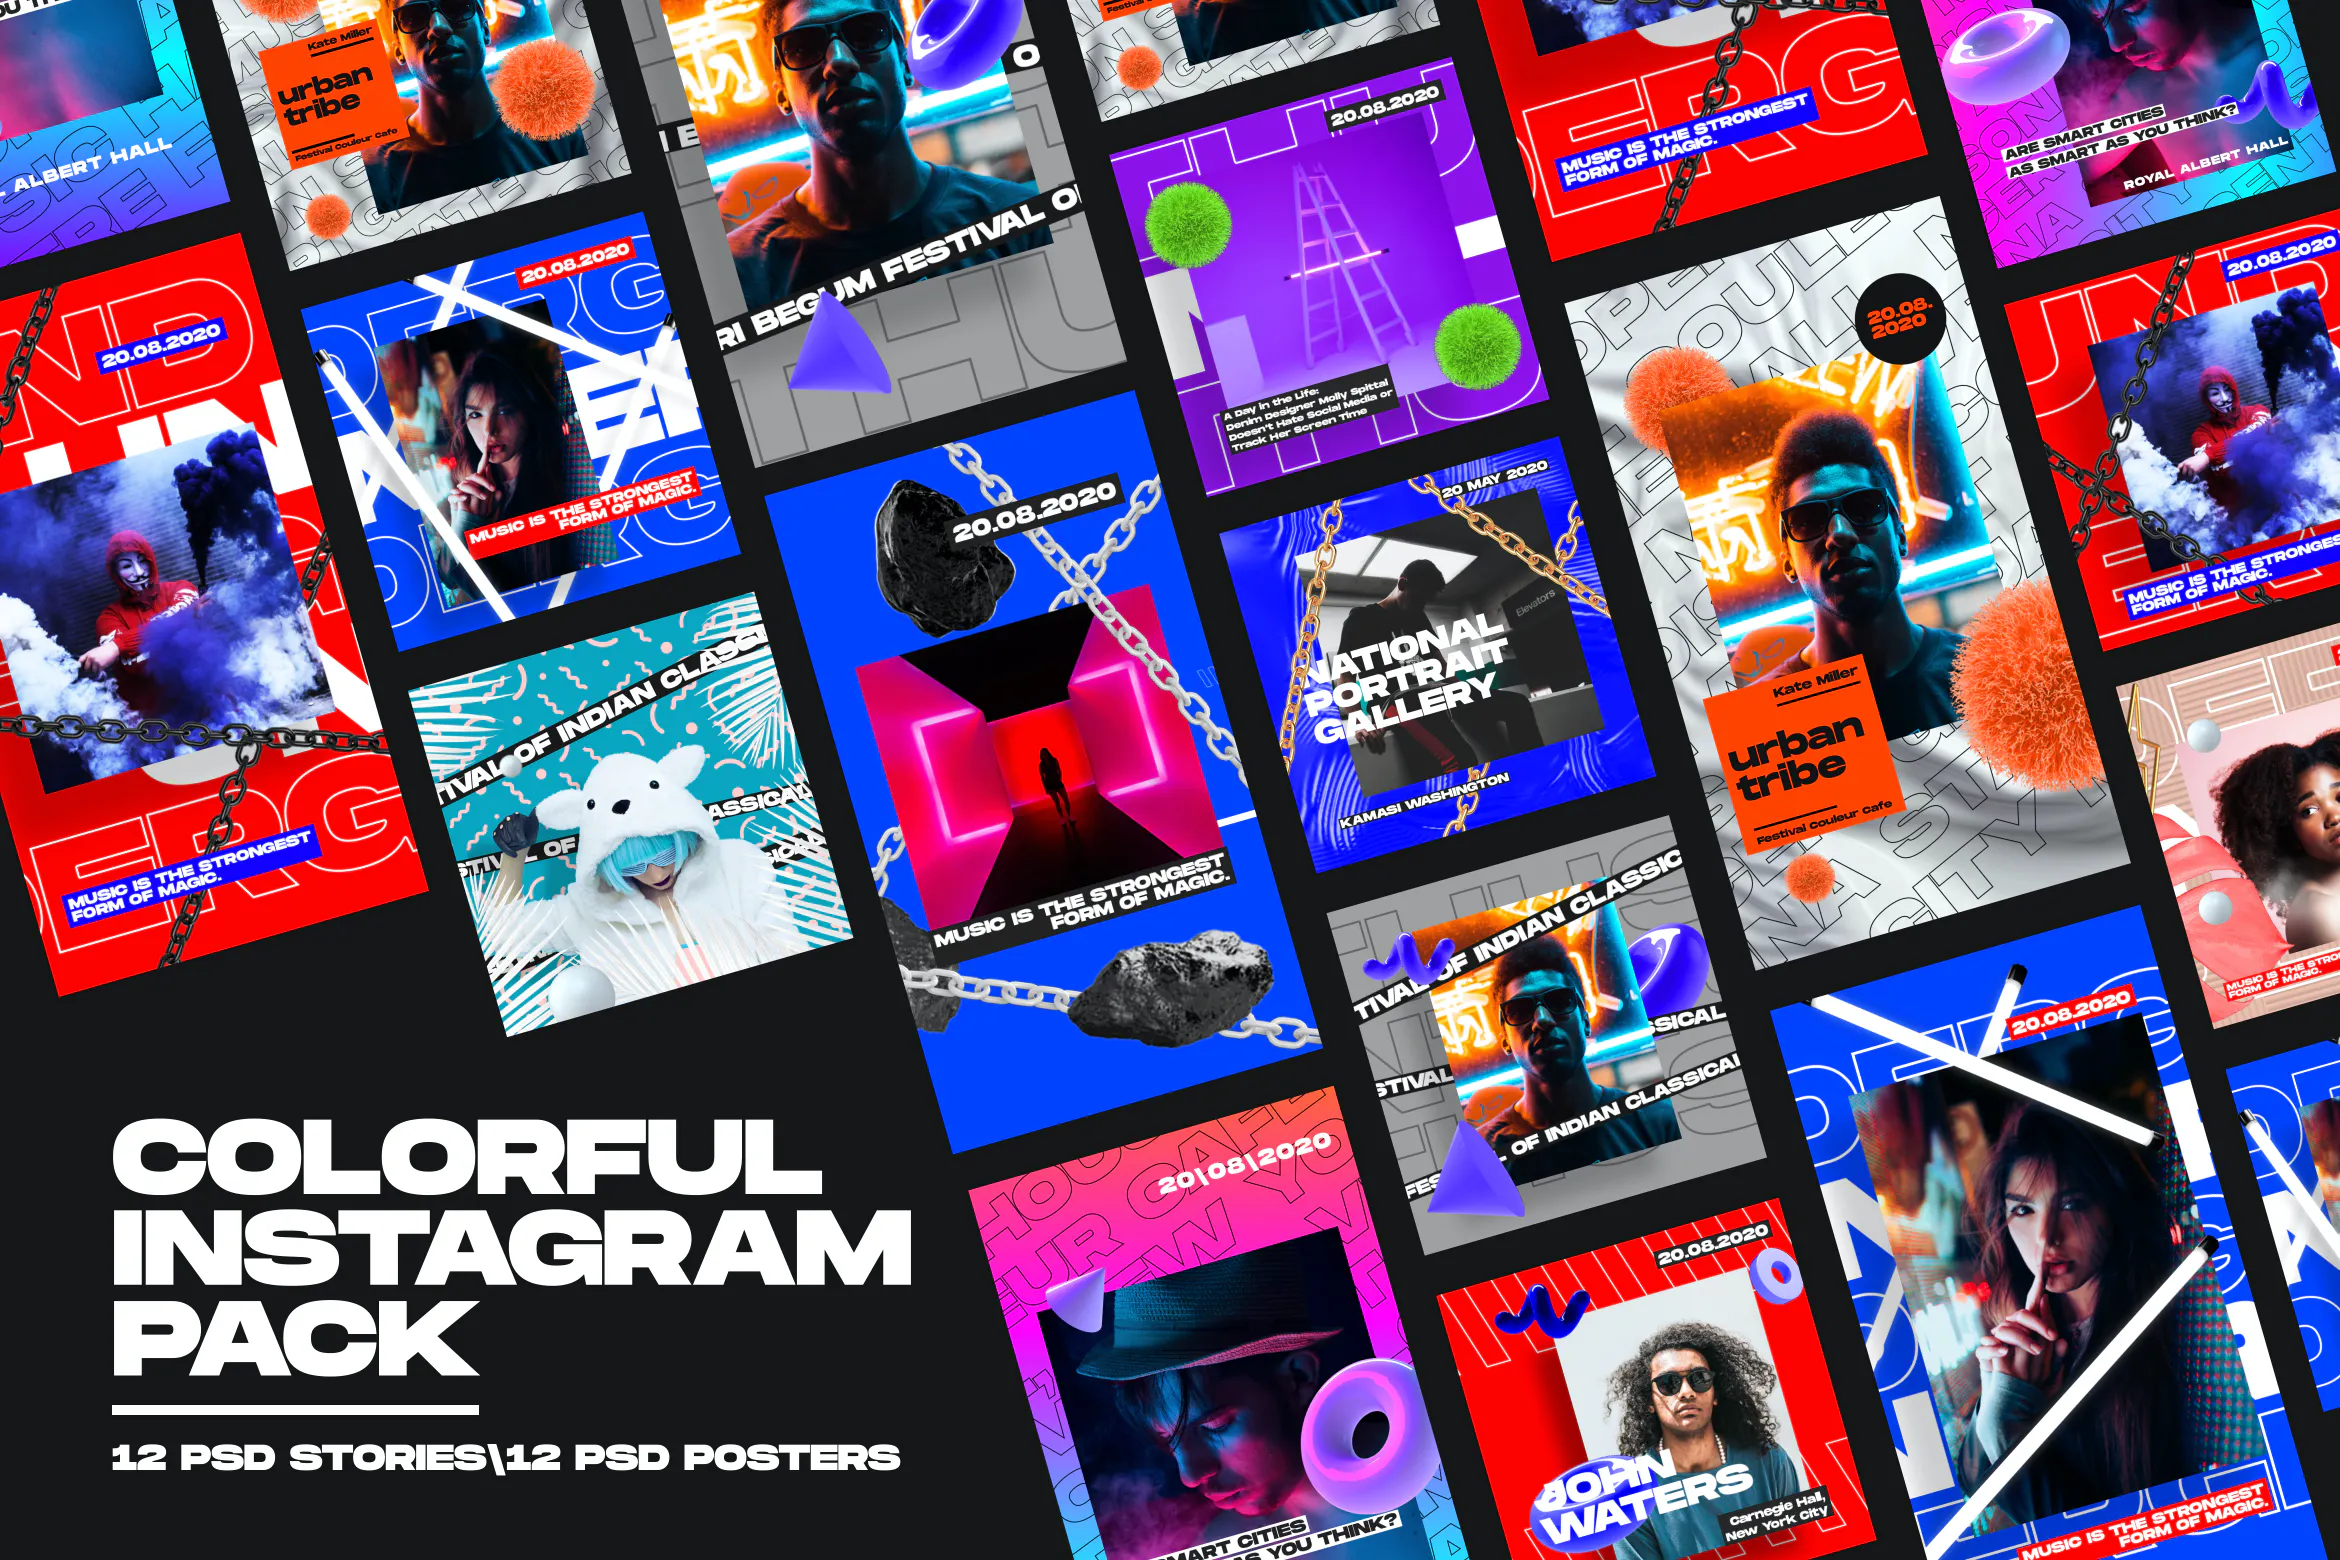 دانلود قالب پست و استوری اینستاگرام Colorful Instagram Pack